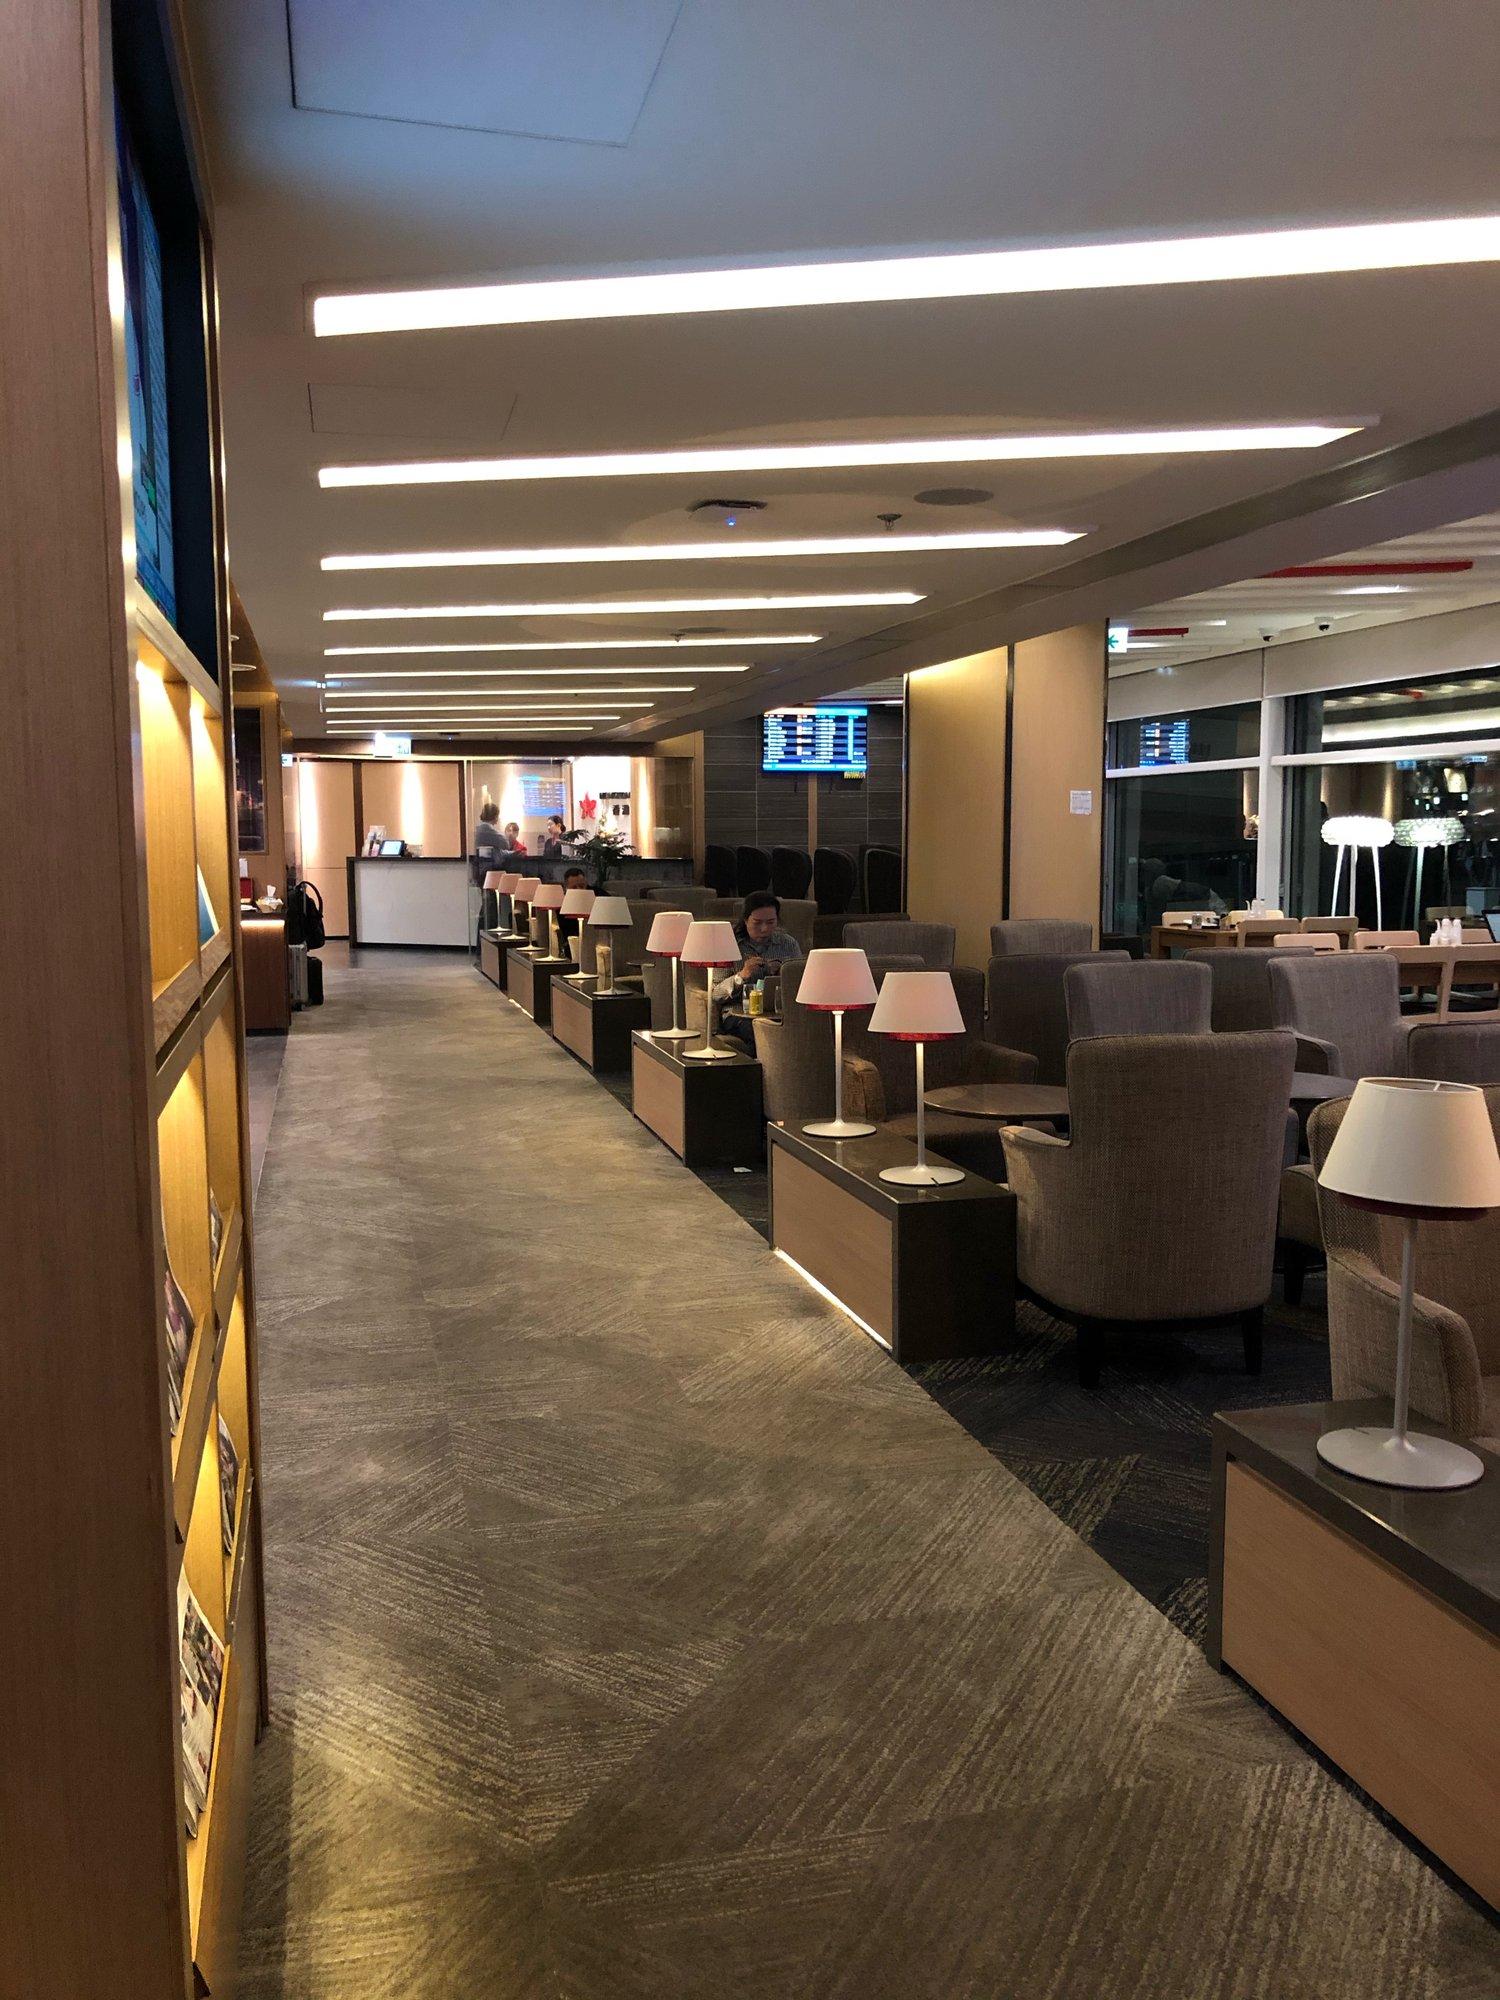 Hong Kong Airlines VIP Lounge (Club Bauhinia) image 36 of 40